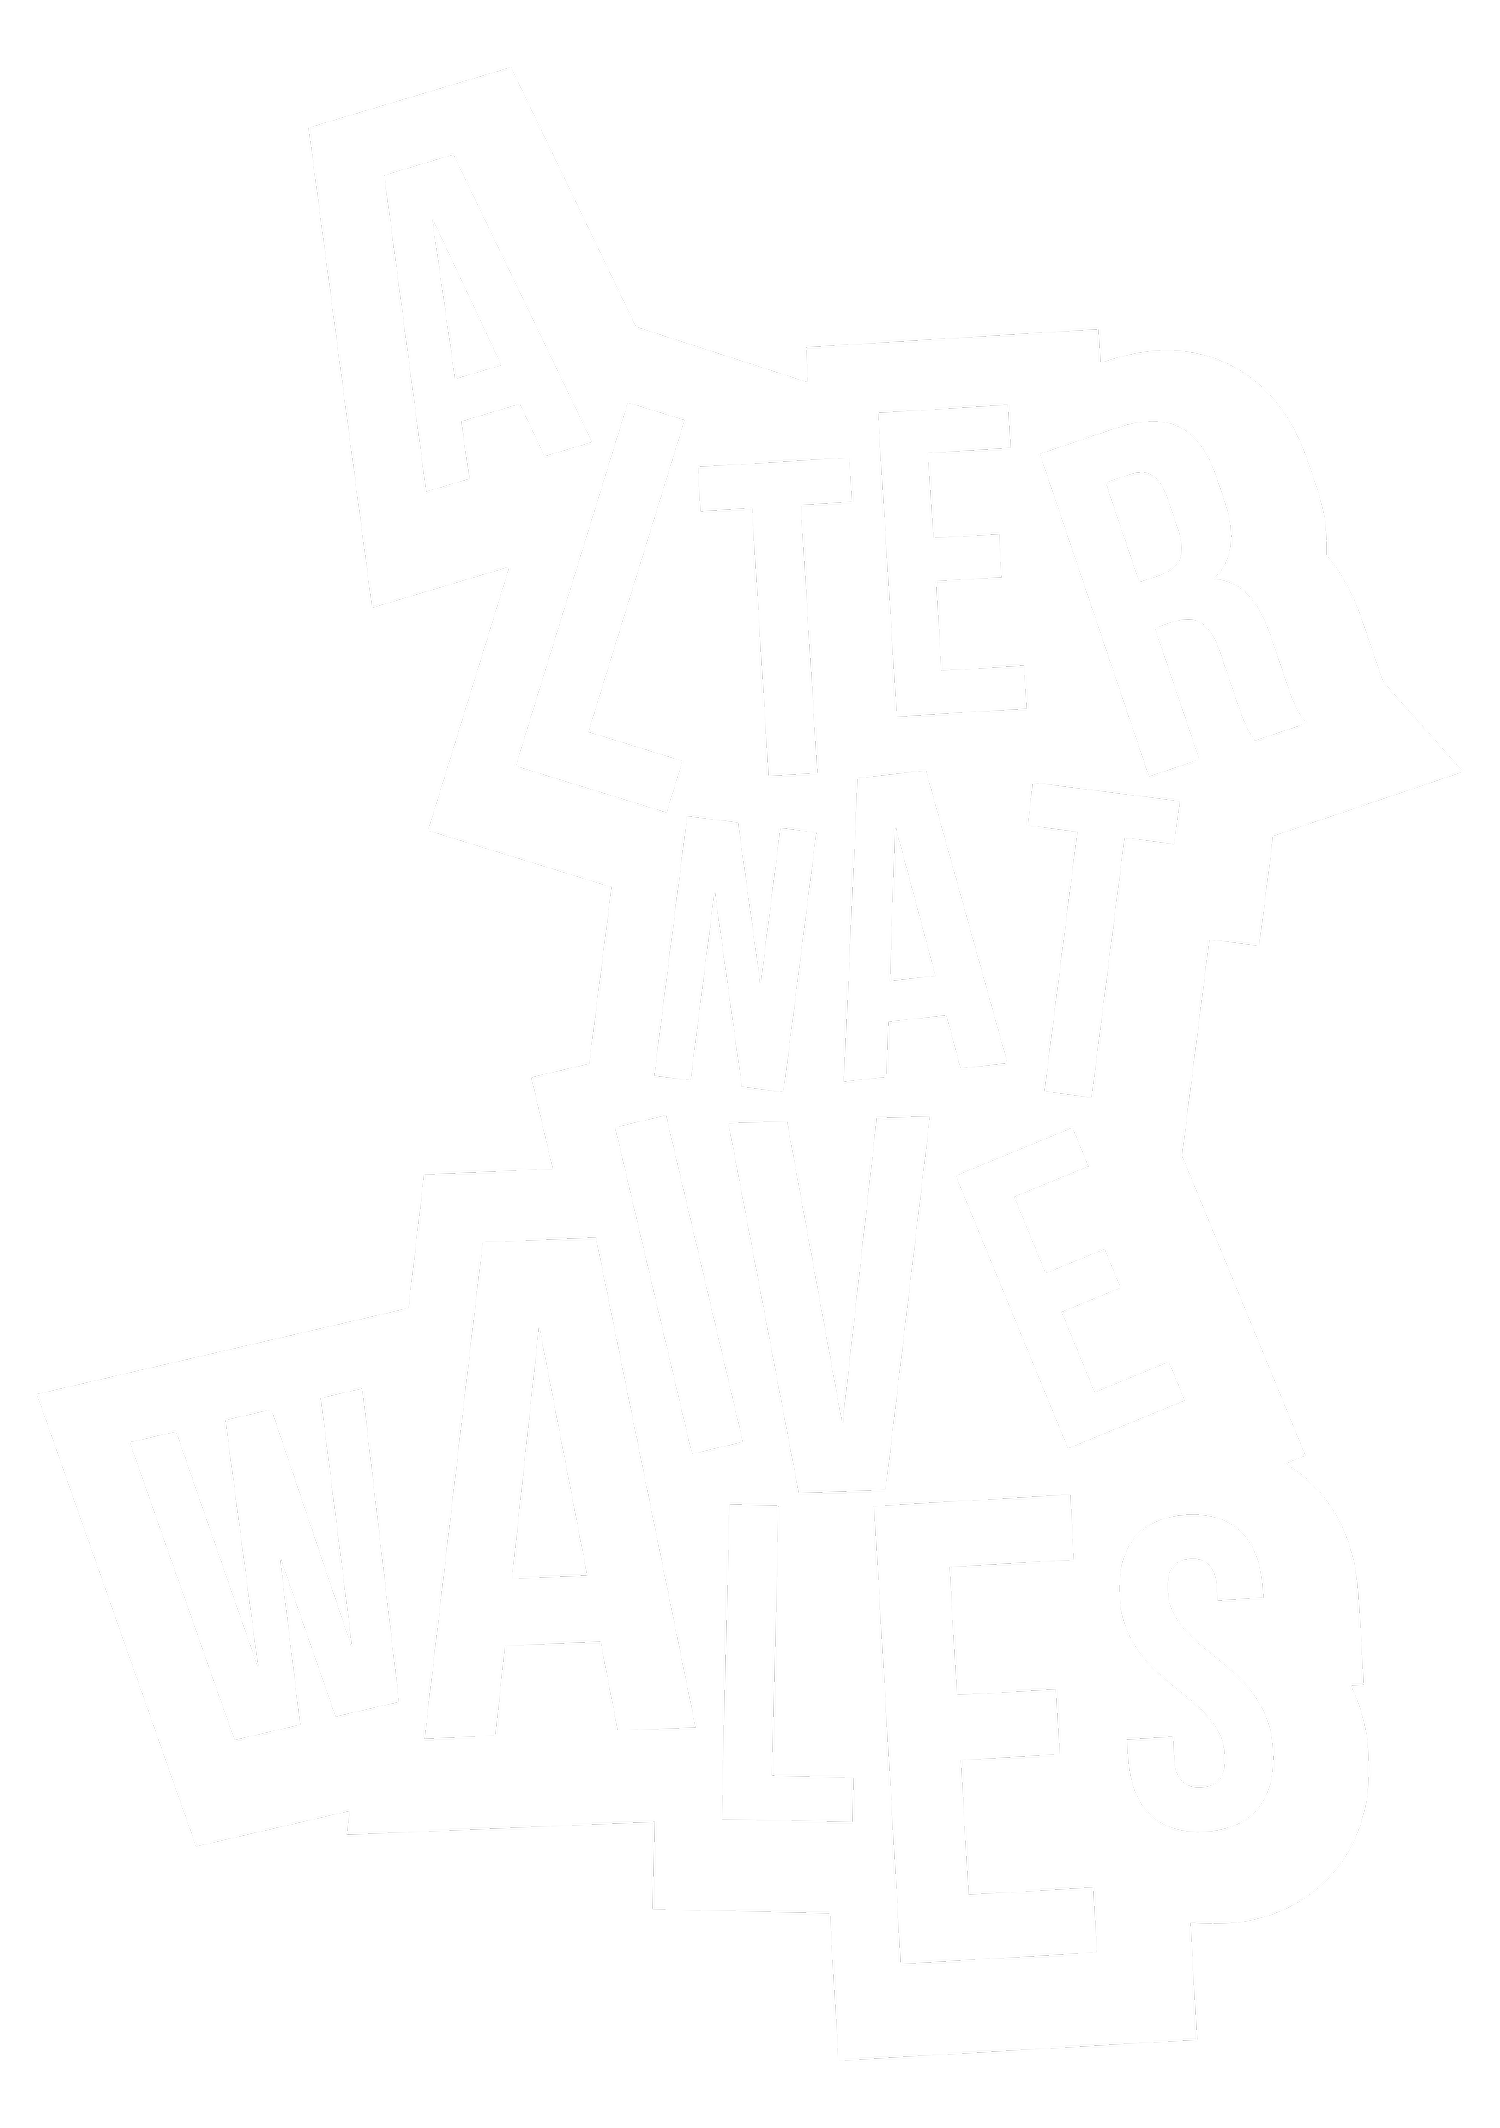 Contact — Alternative Wales